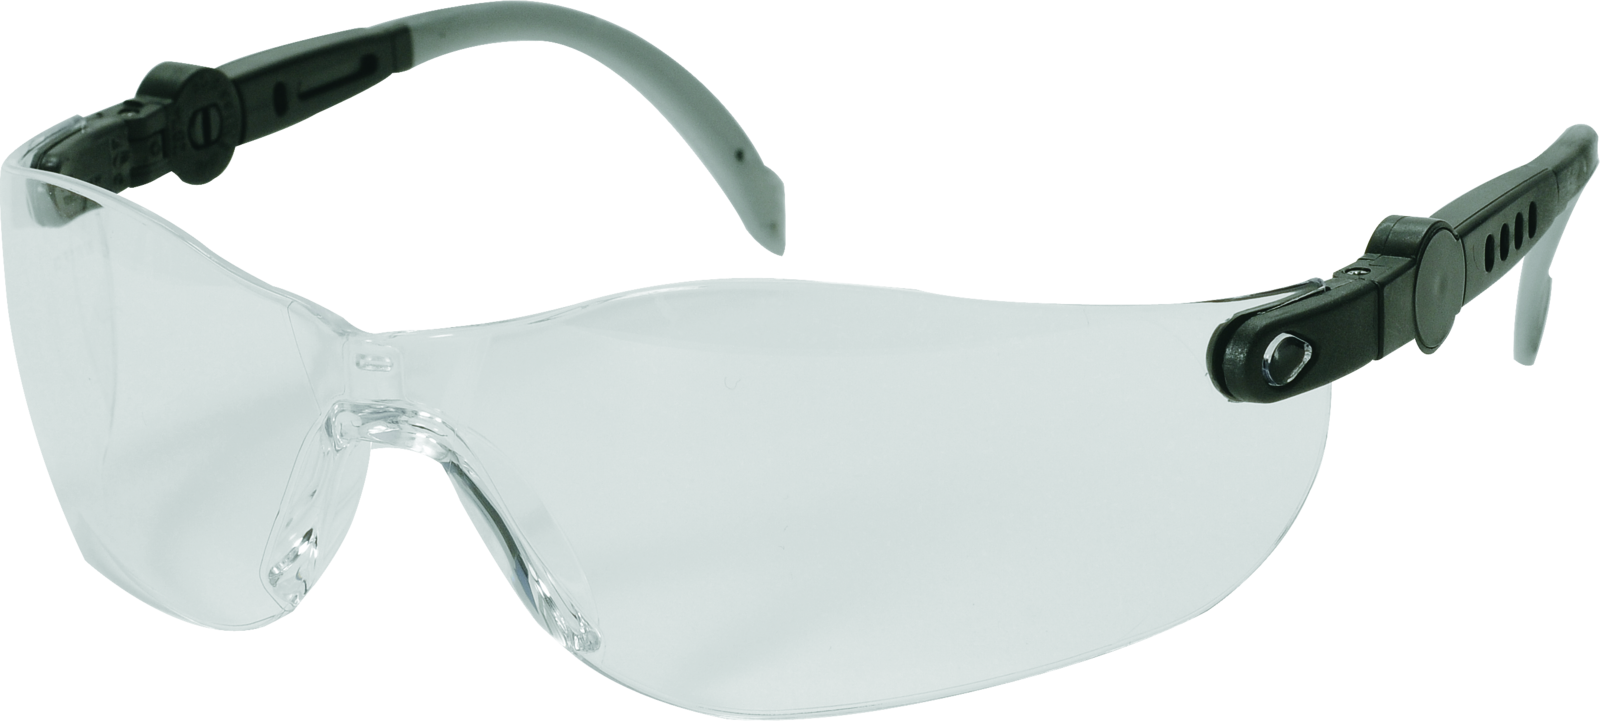 OX-ON Eyewear Space Comfort Clear 334.28